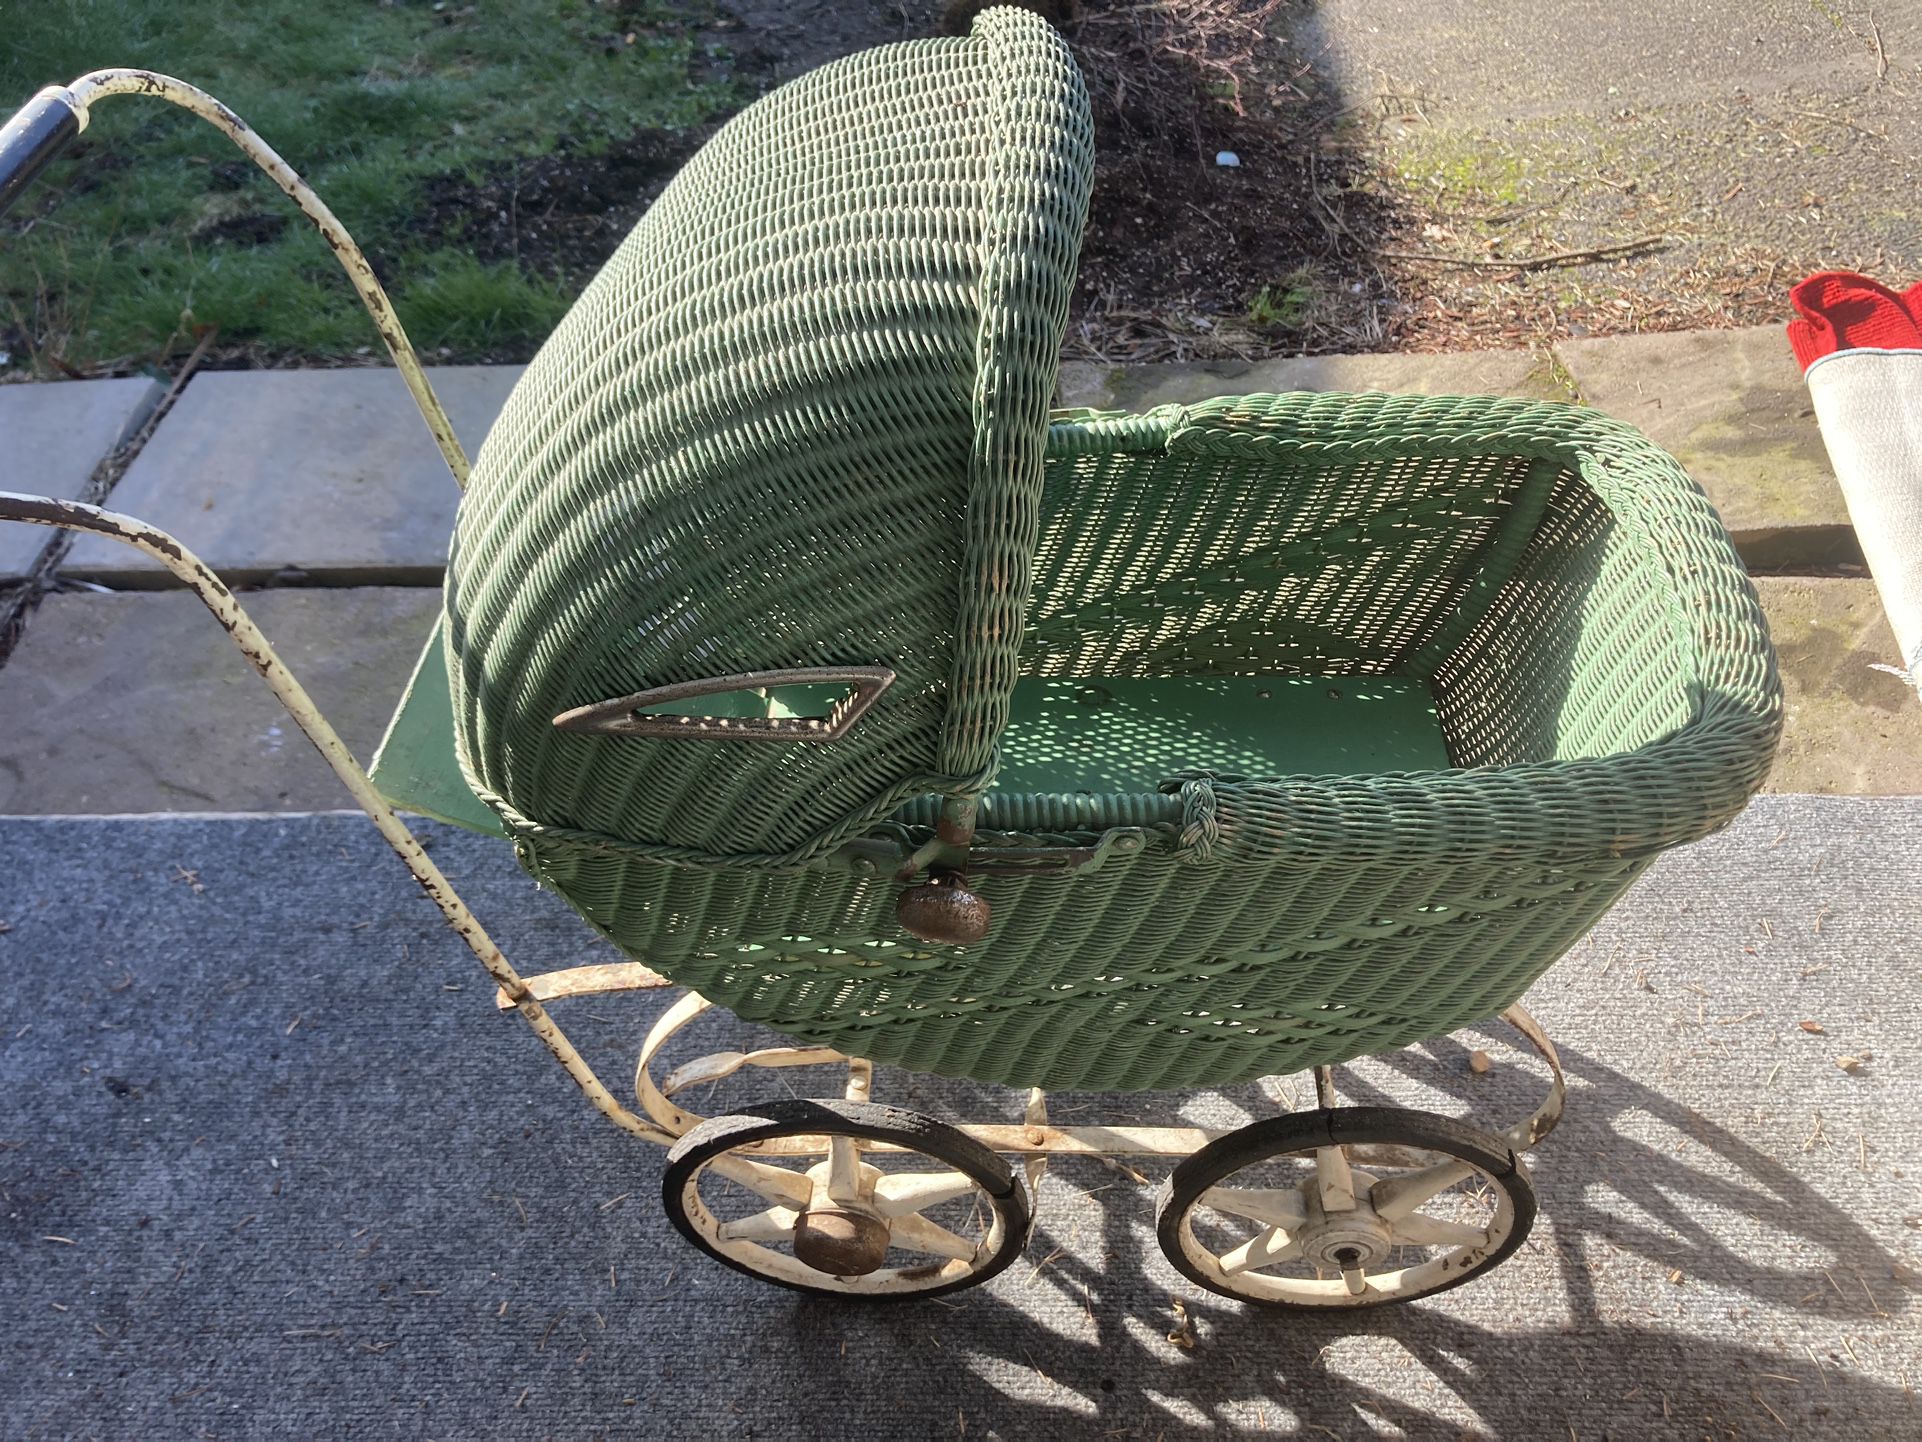 Antique Mid century baby stroller